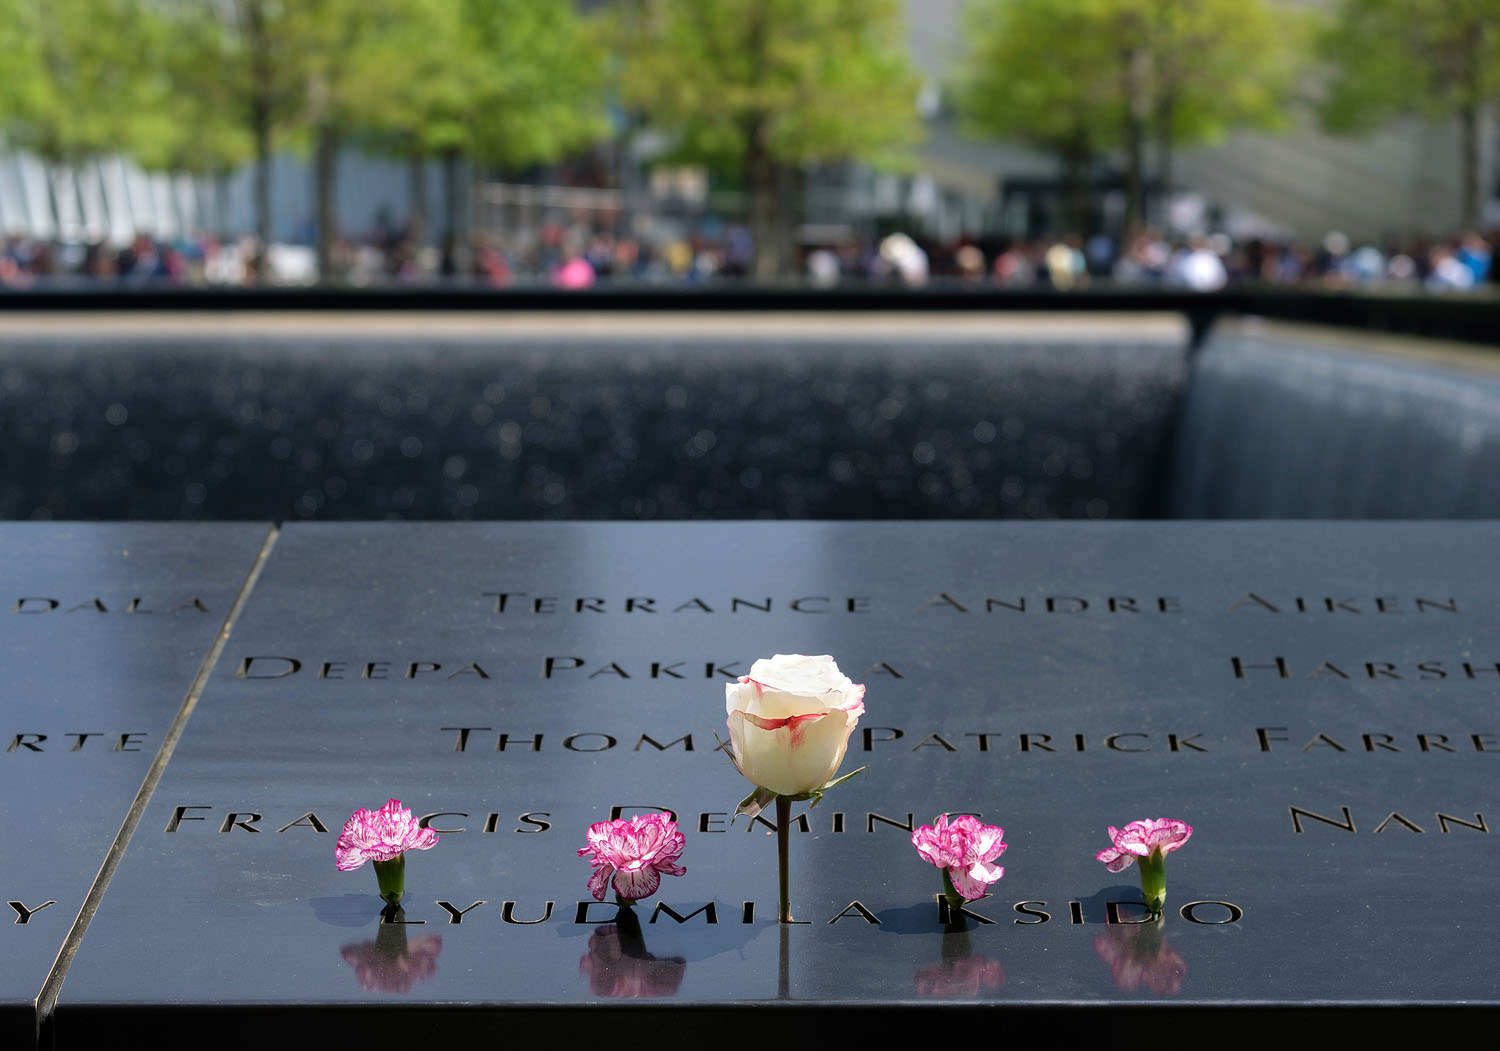 9/11 Memorial at the World Trade Center